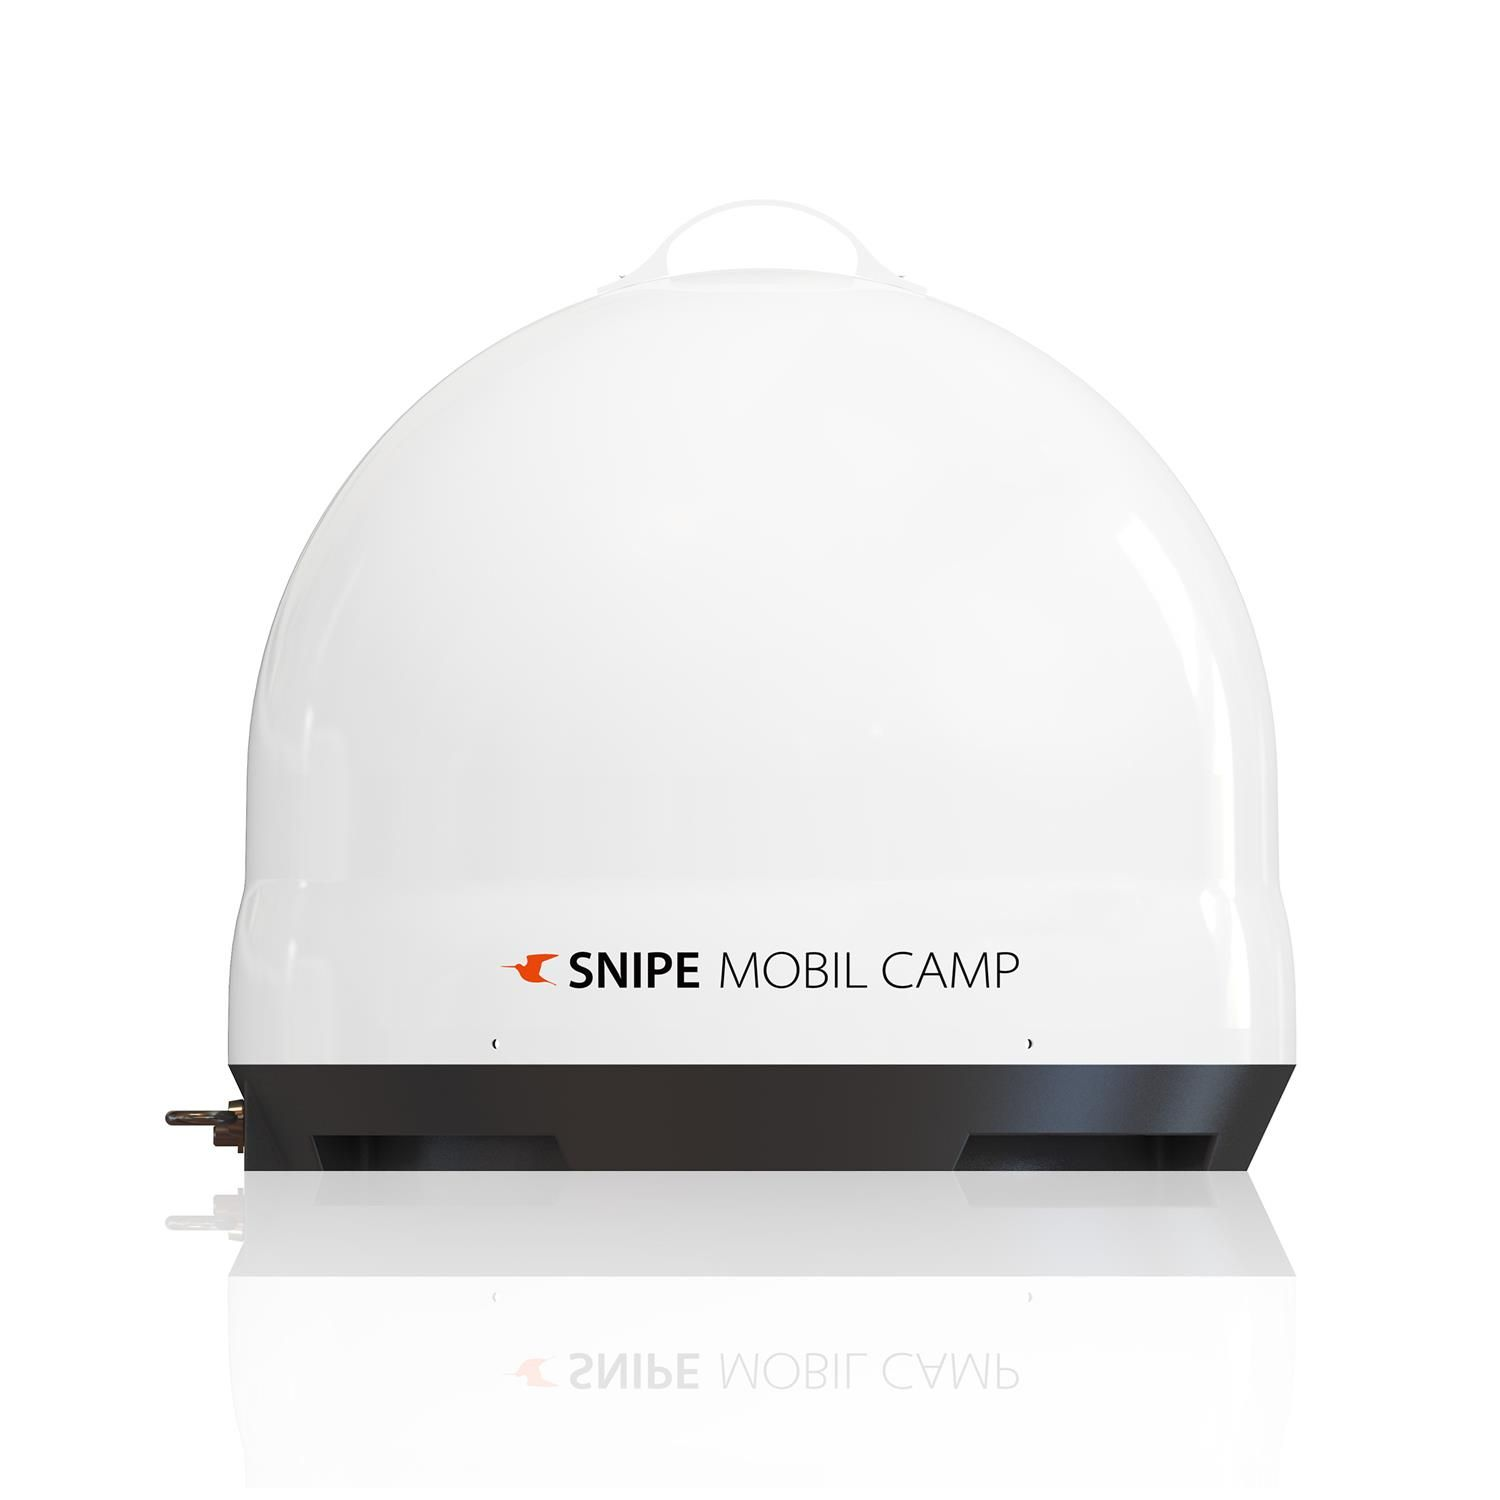 Mobil Snipe Sat-Antenne Camp SELFSAT